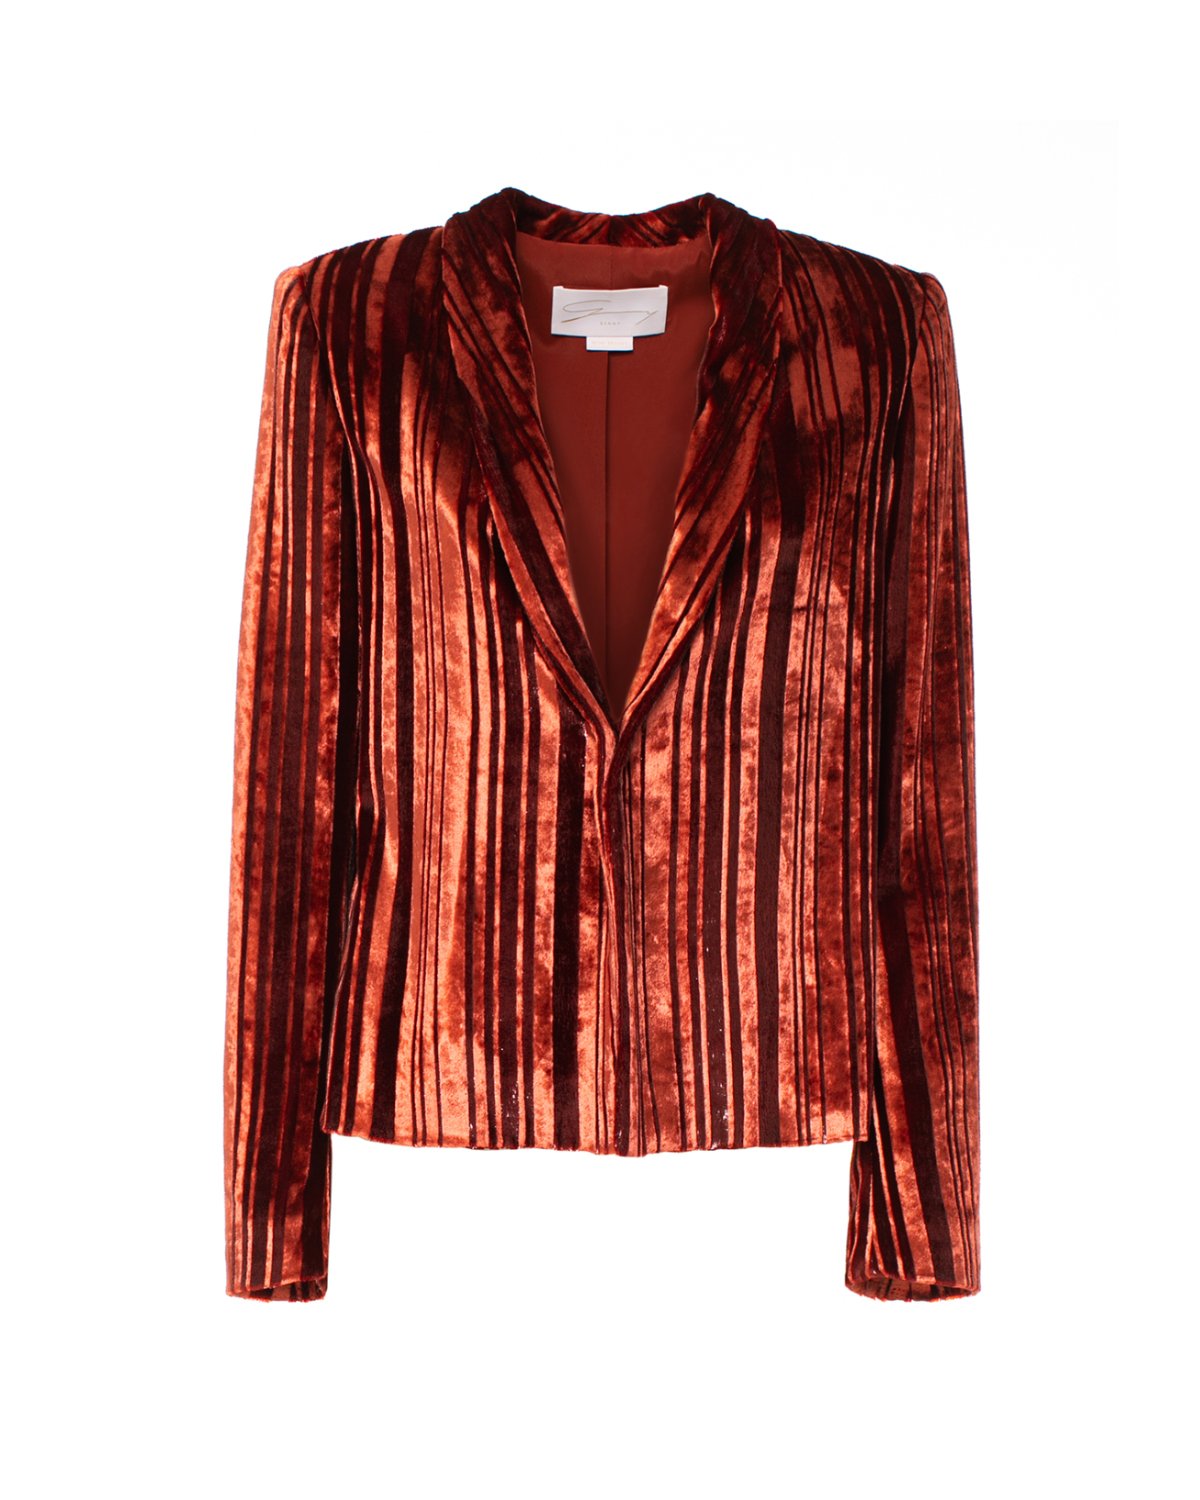 Bronze velvet jacket | Sale, -50%, Private sale | Genny